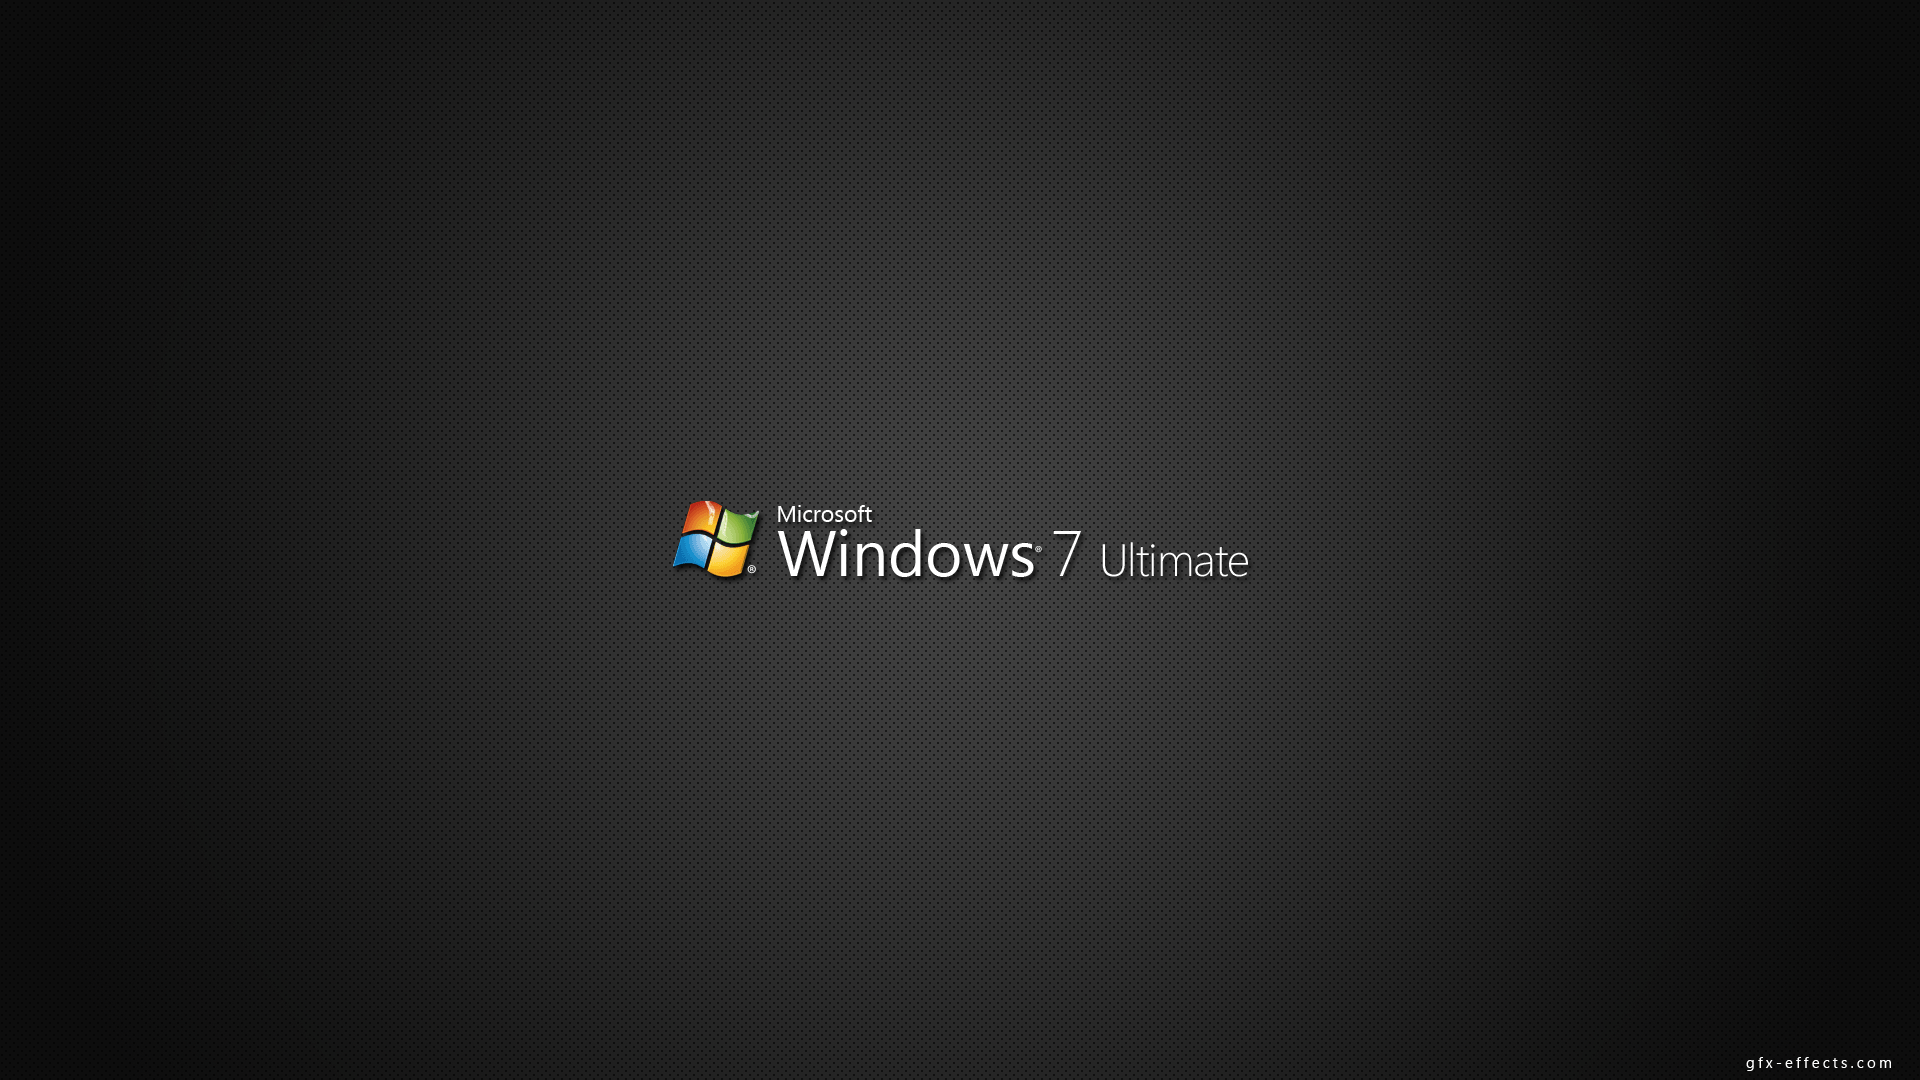 Windows 7 Ultimate Wallpaper. Most Beautiful Windows 7 Ultimate